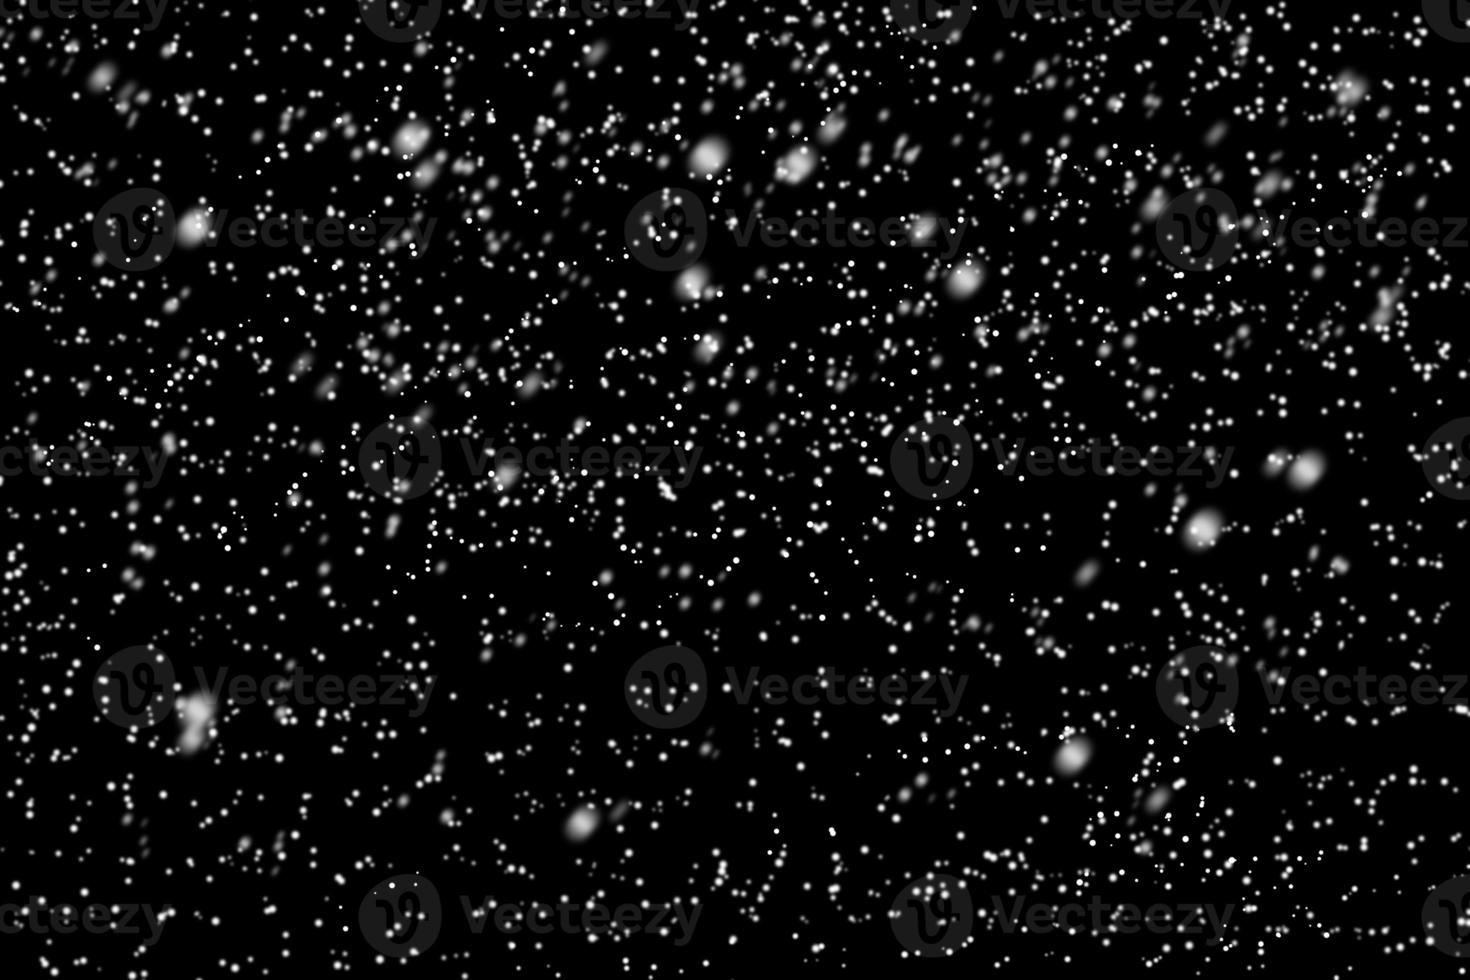 Falling snow on evening sky background. Snowflakes over night dark sky photo